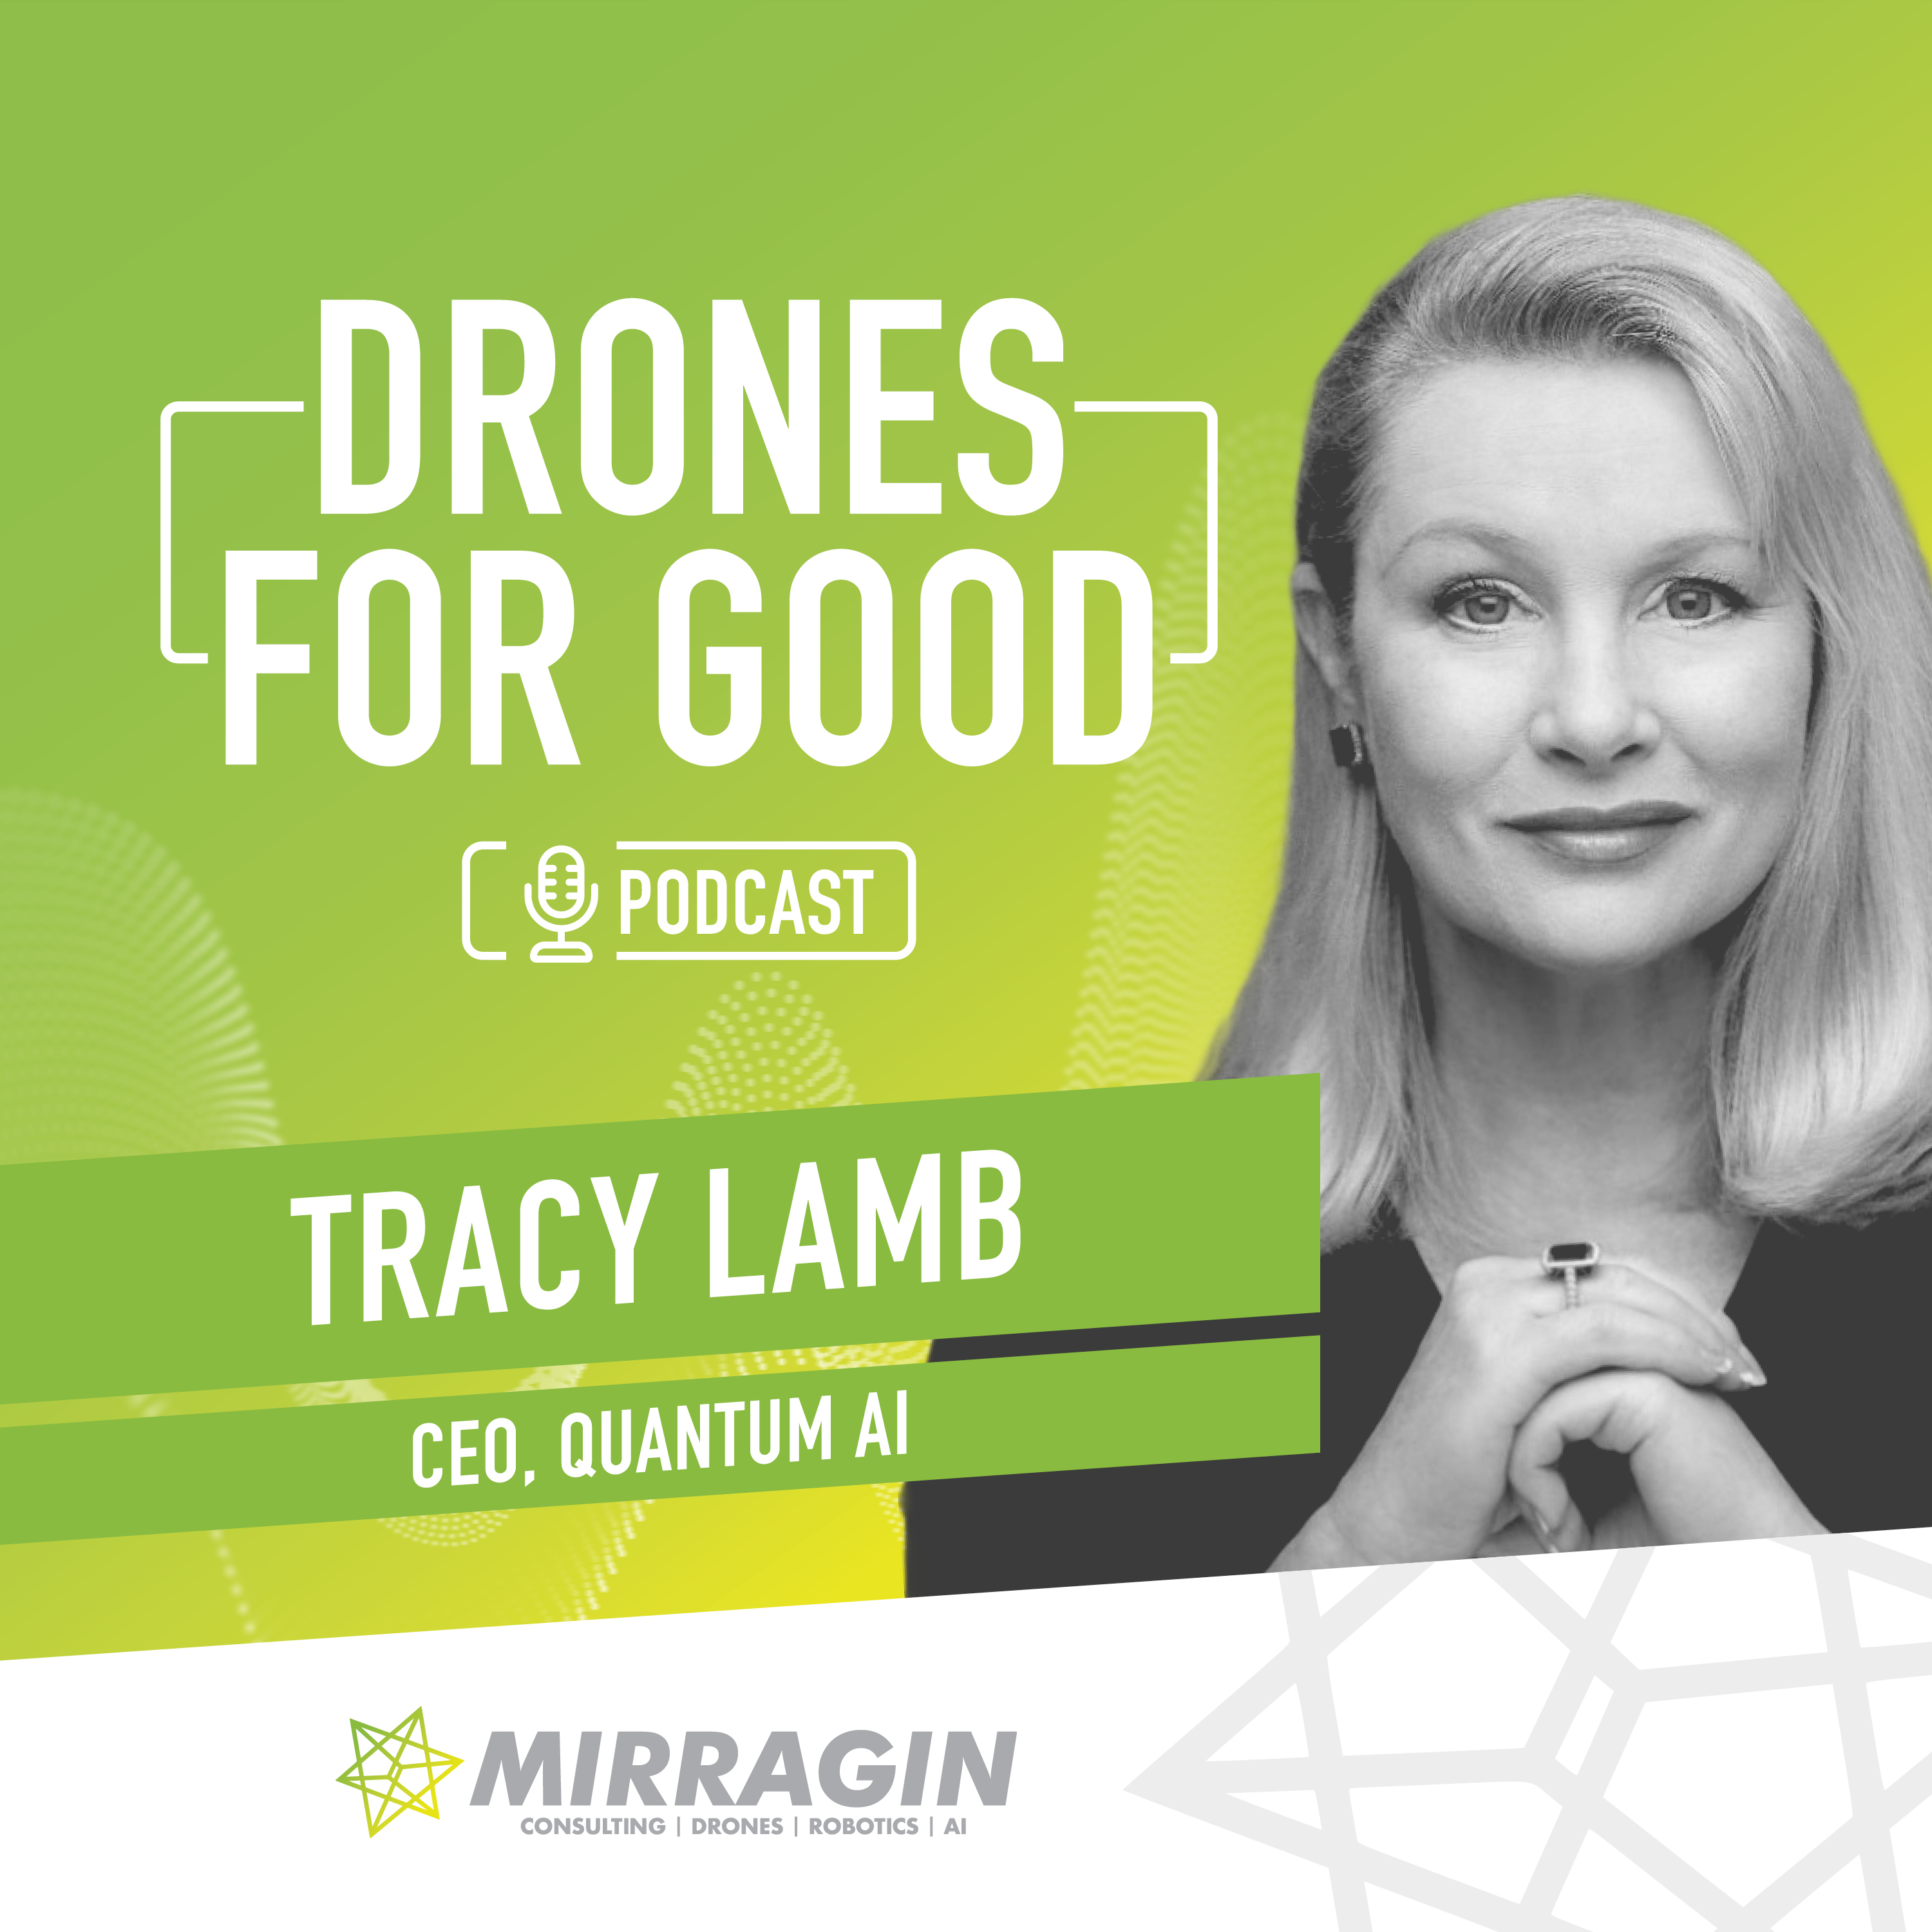 Tracy Lamb - CEO, Quantum AI